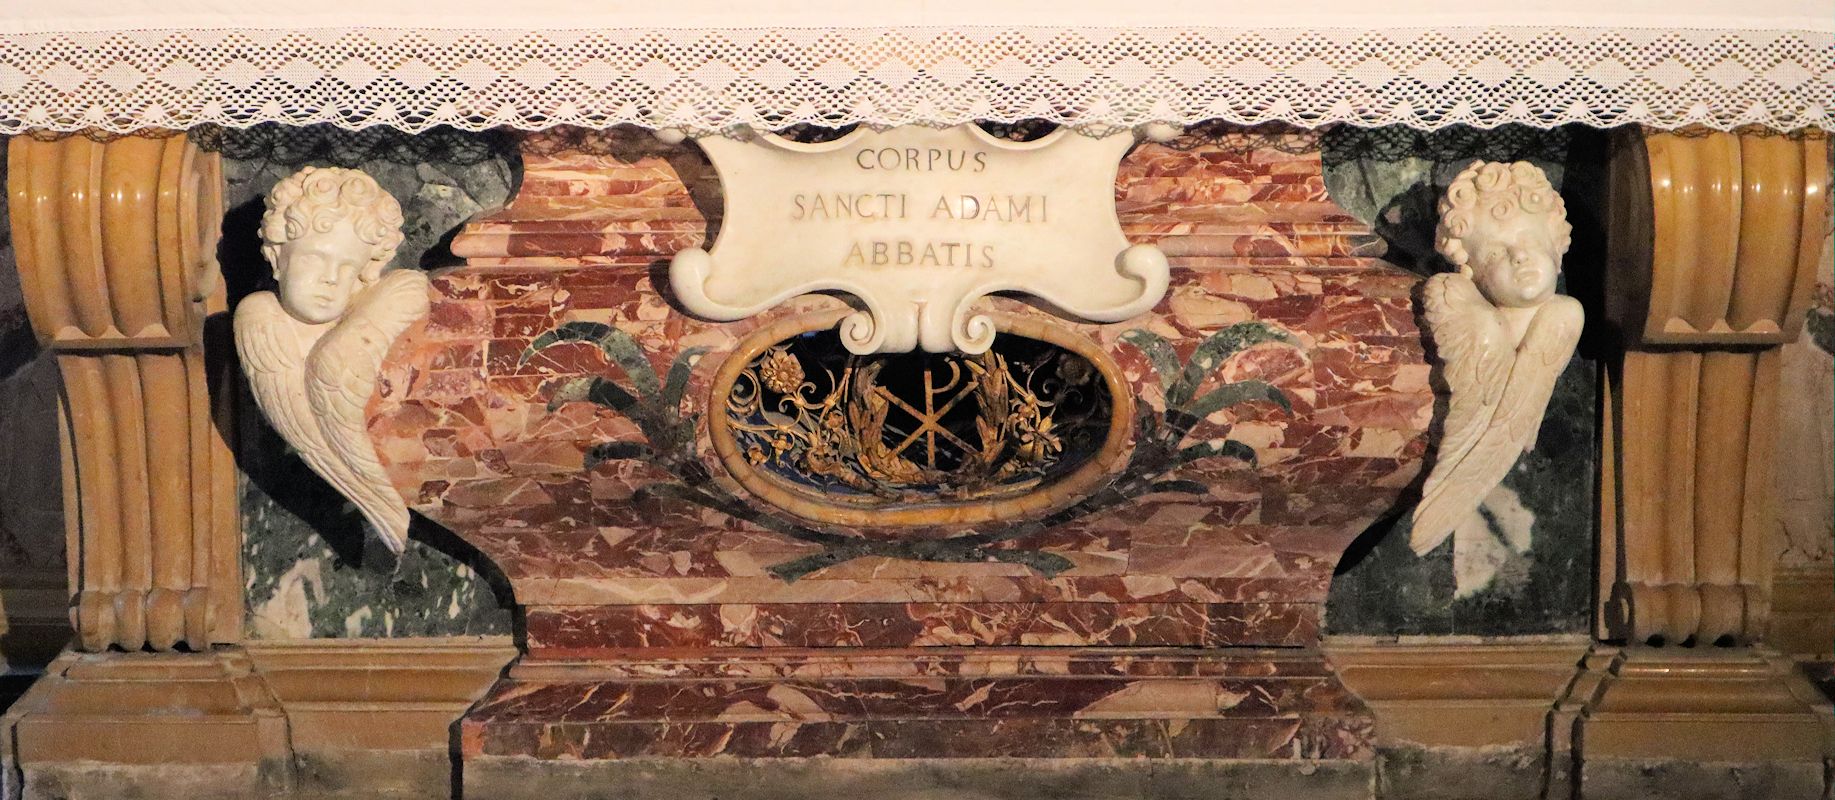 Adams Reliquien in der Kathedrale in Fermo